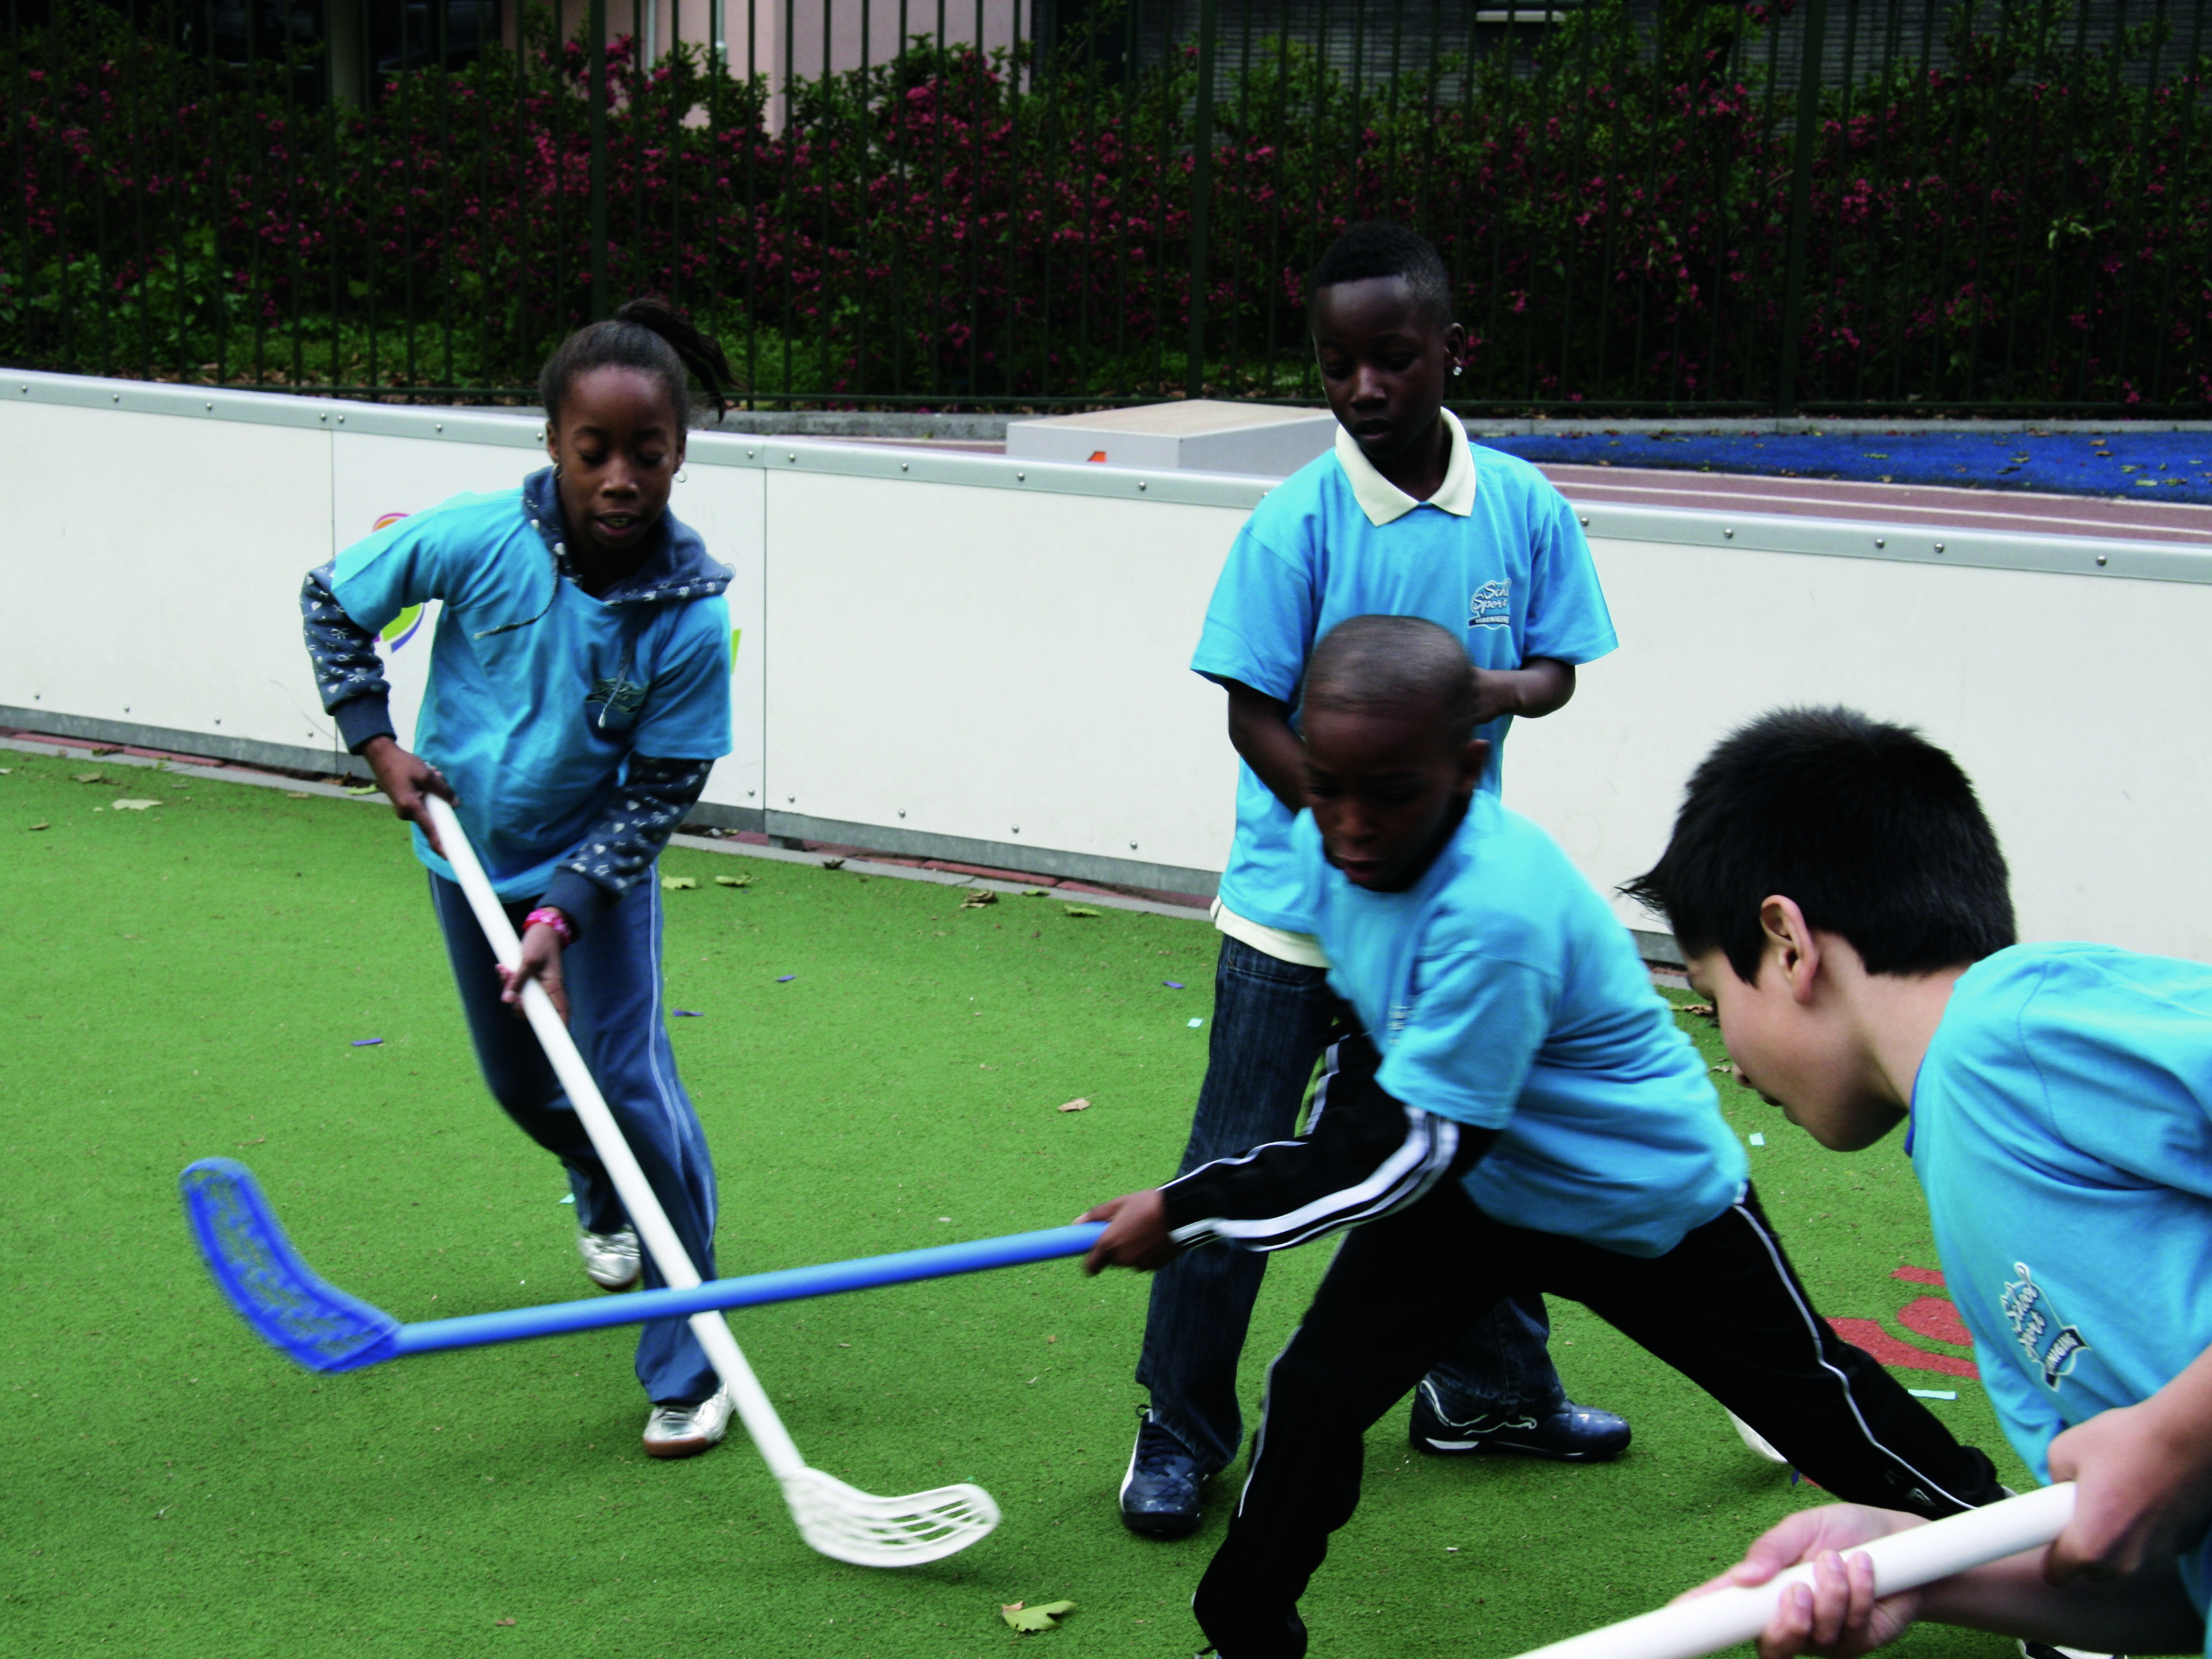 Children playing field hockey - Fotografie van der Graaf